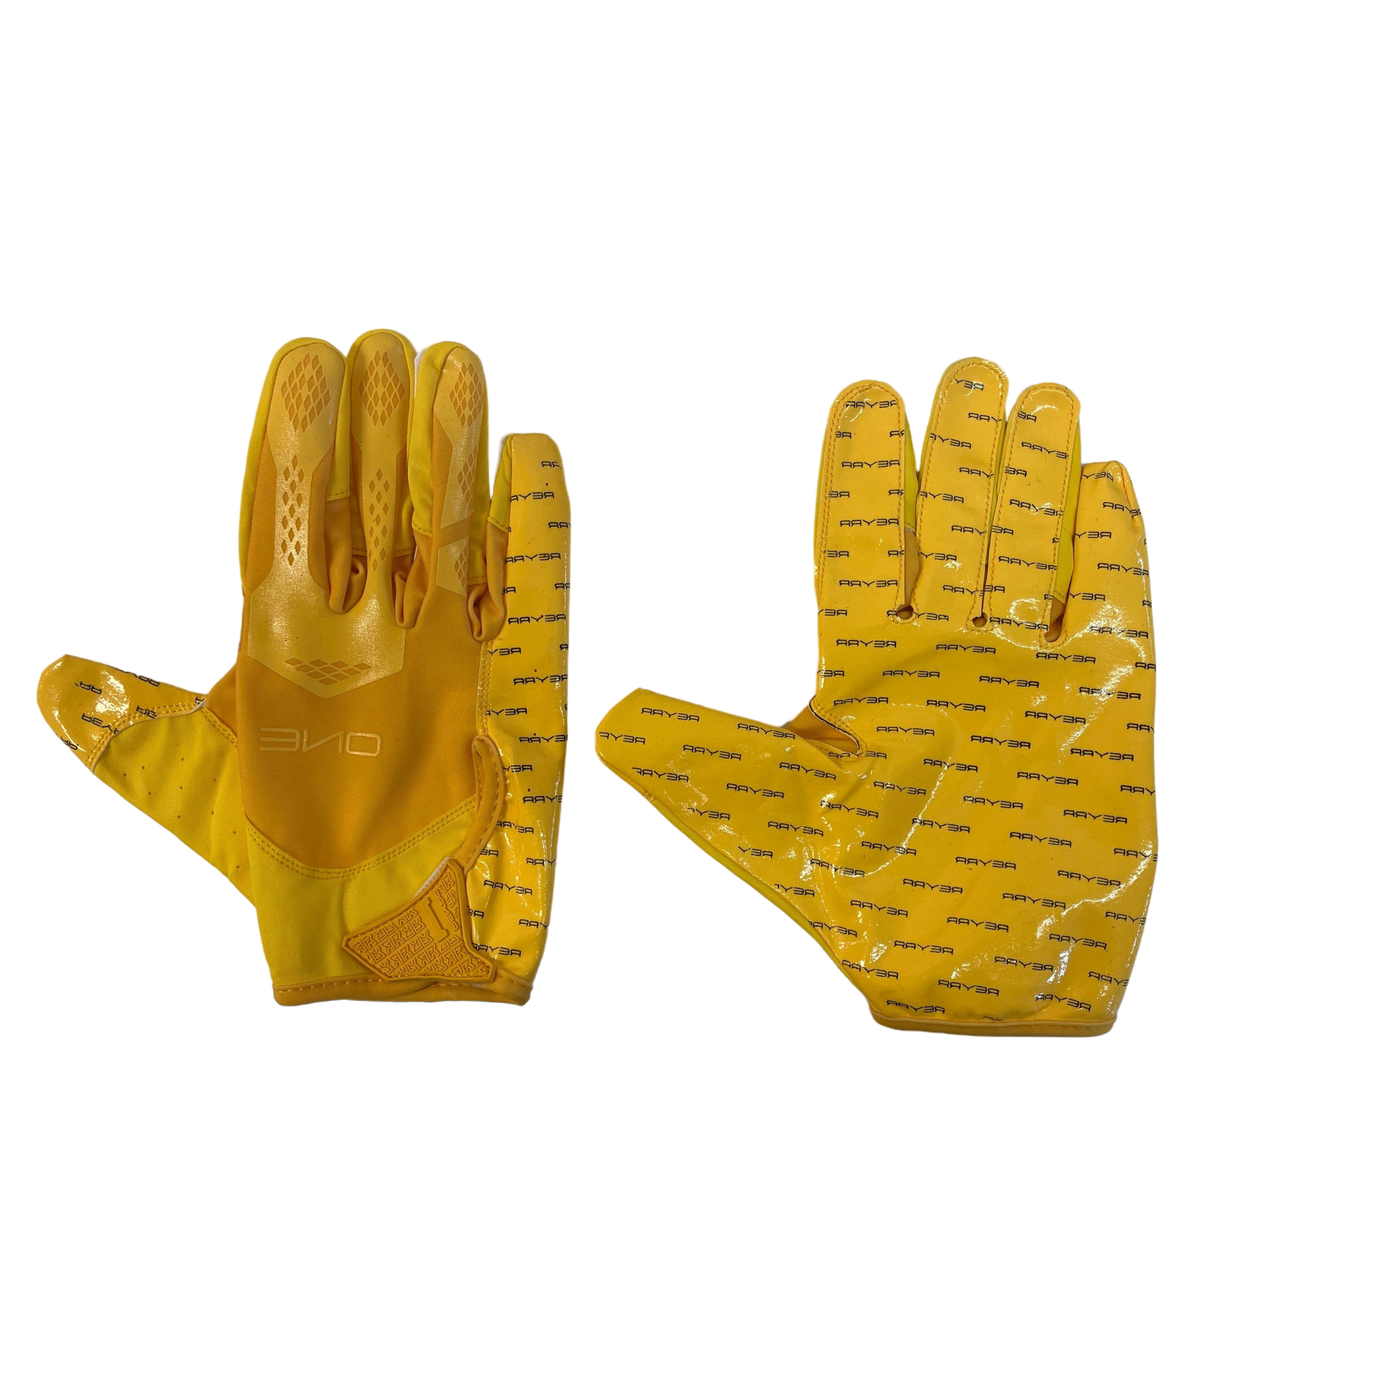 Reyrr ONE (THE ONE) - BCN - Premium Football Gloves from Reyrr Athletics - Shop now at Reyrr Athletics